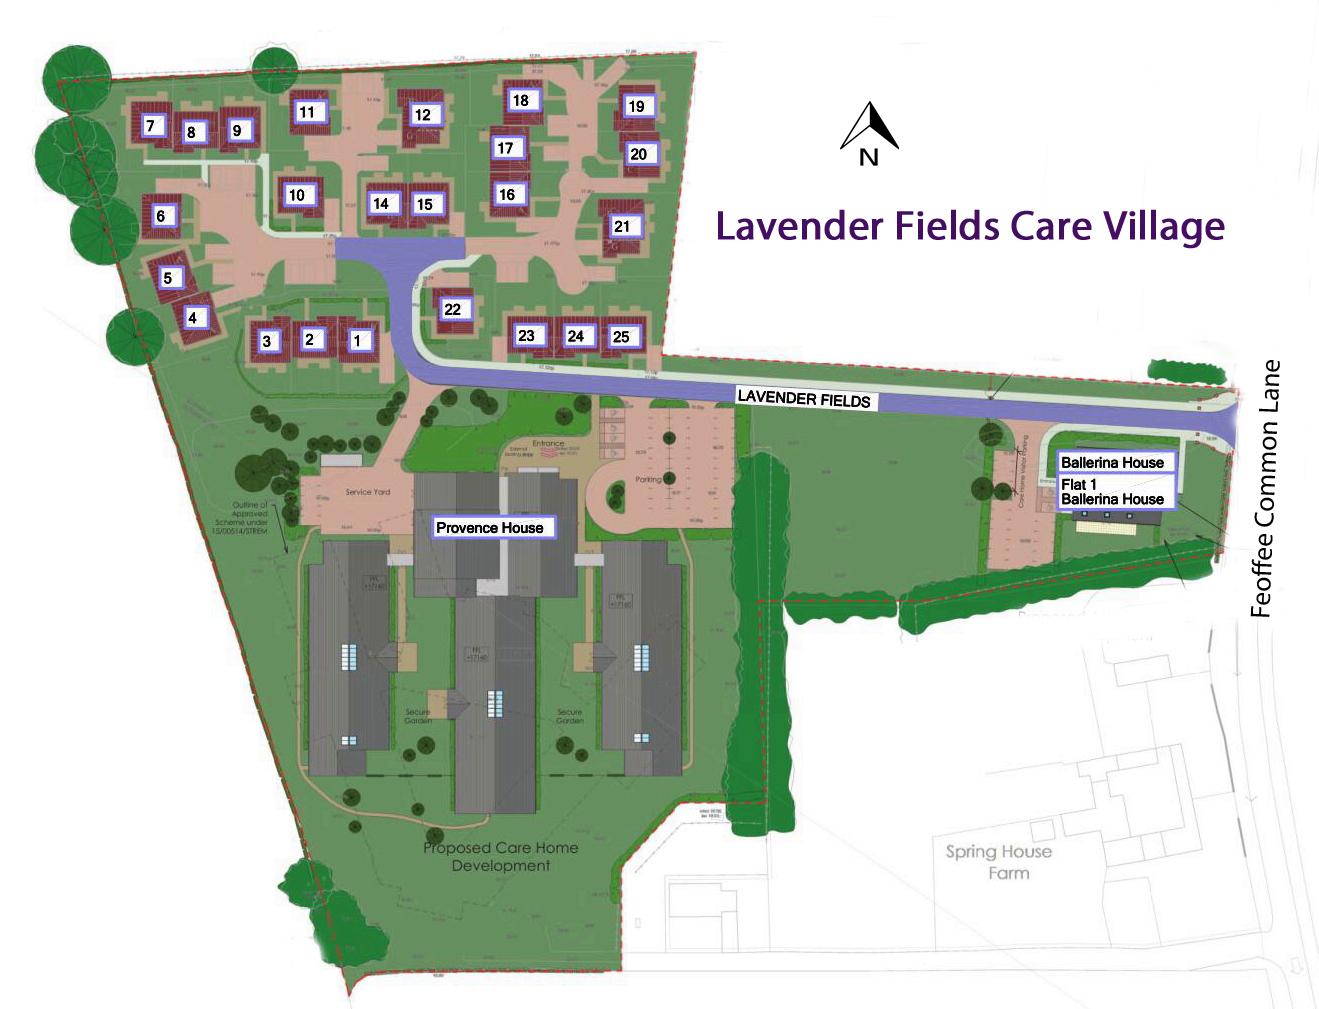 16 Lavender Fields, Feoffee Common Lane, Barmby Moor